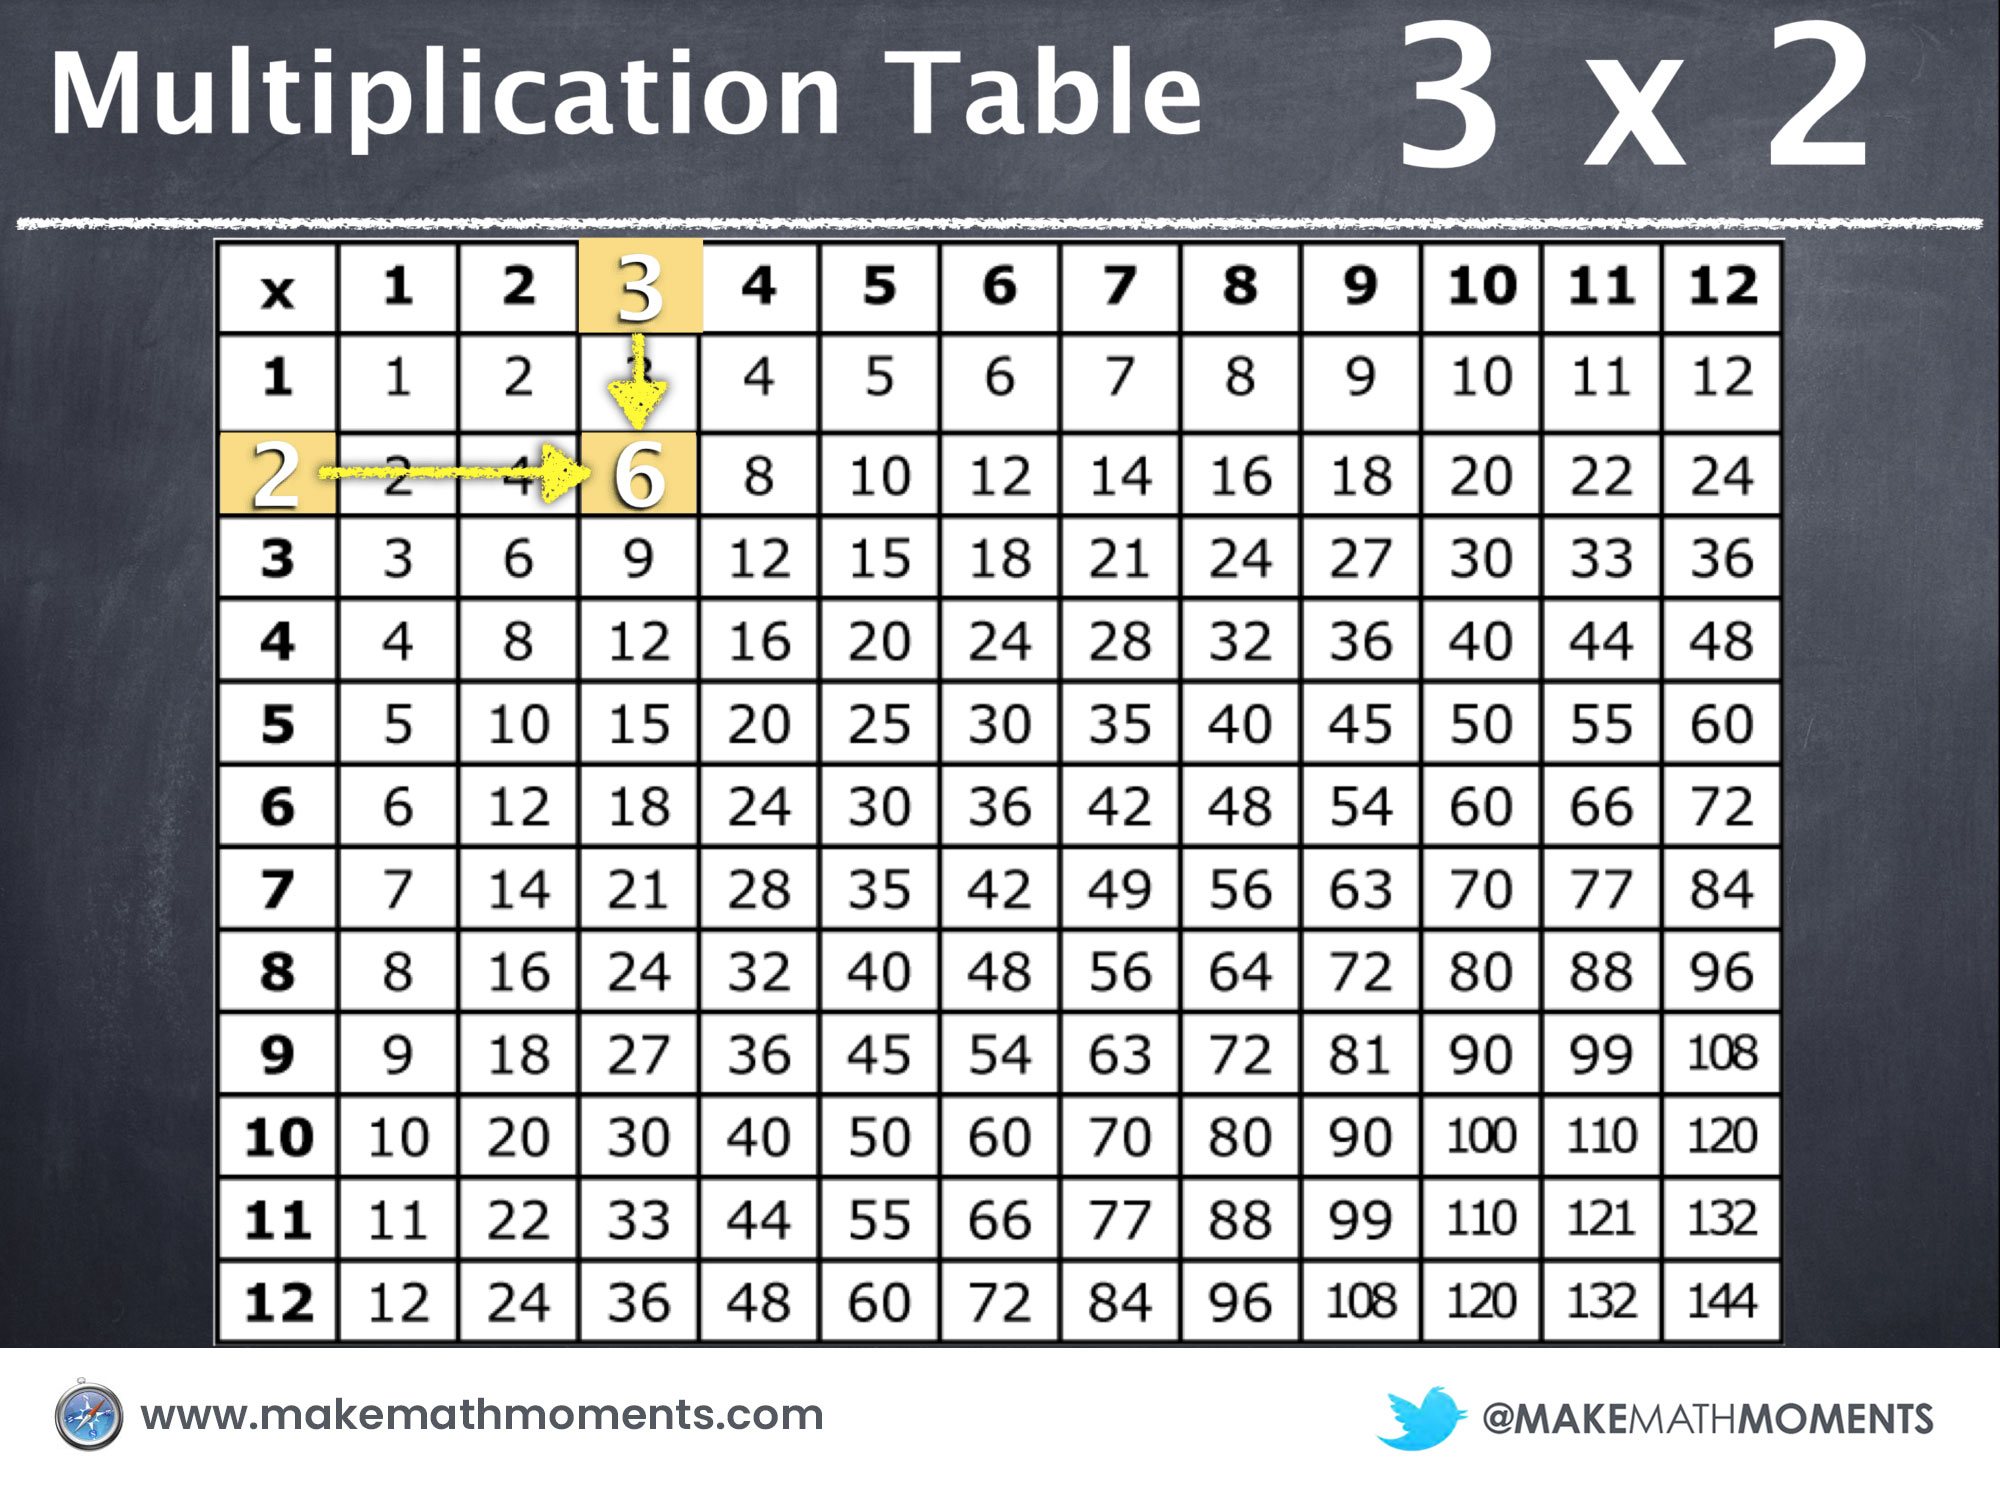 Multiplication Table 3x2 = 6